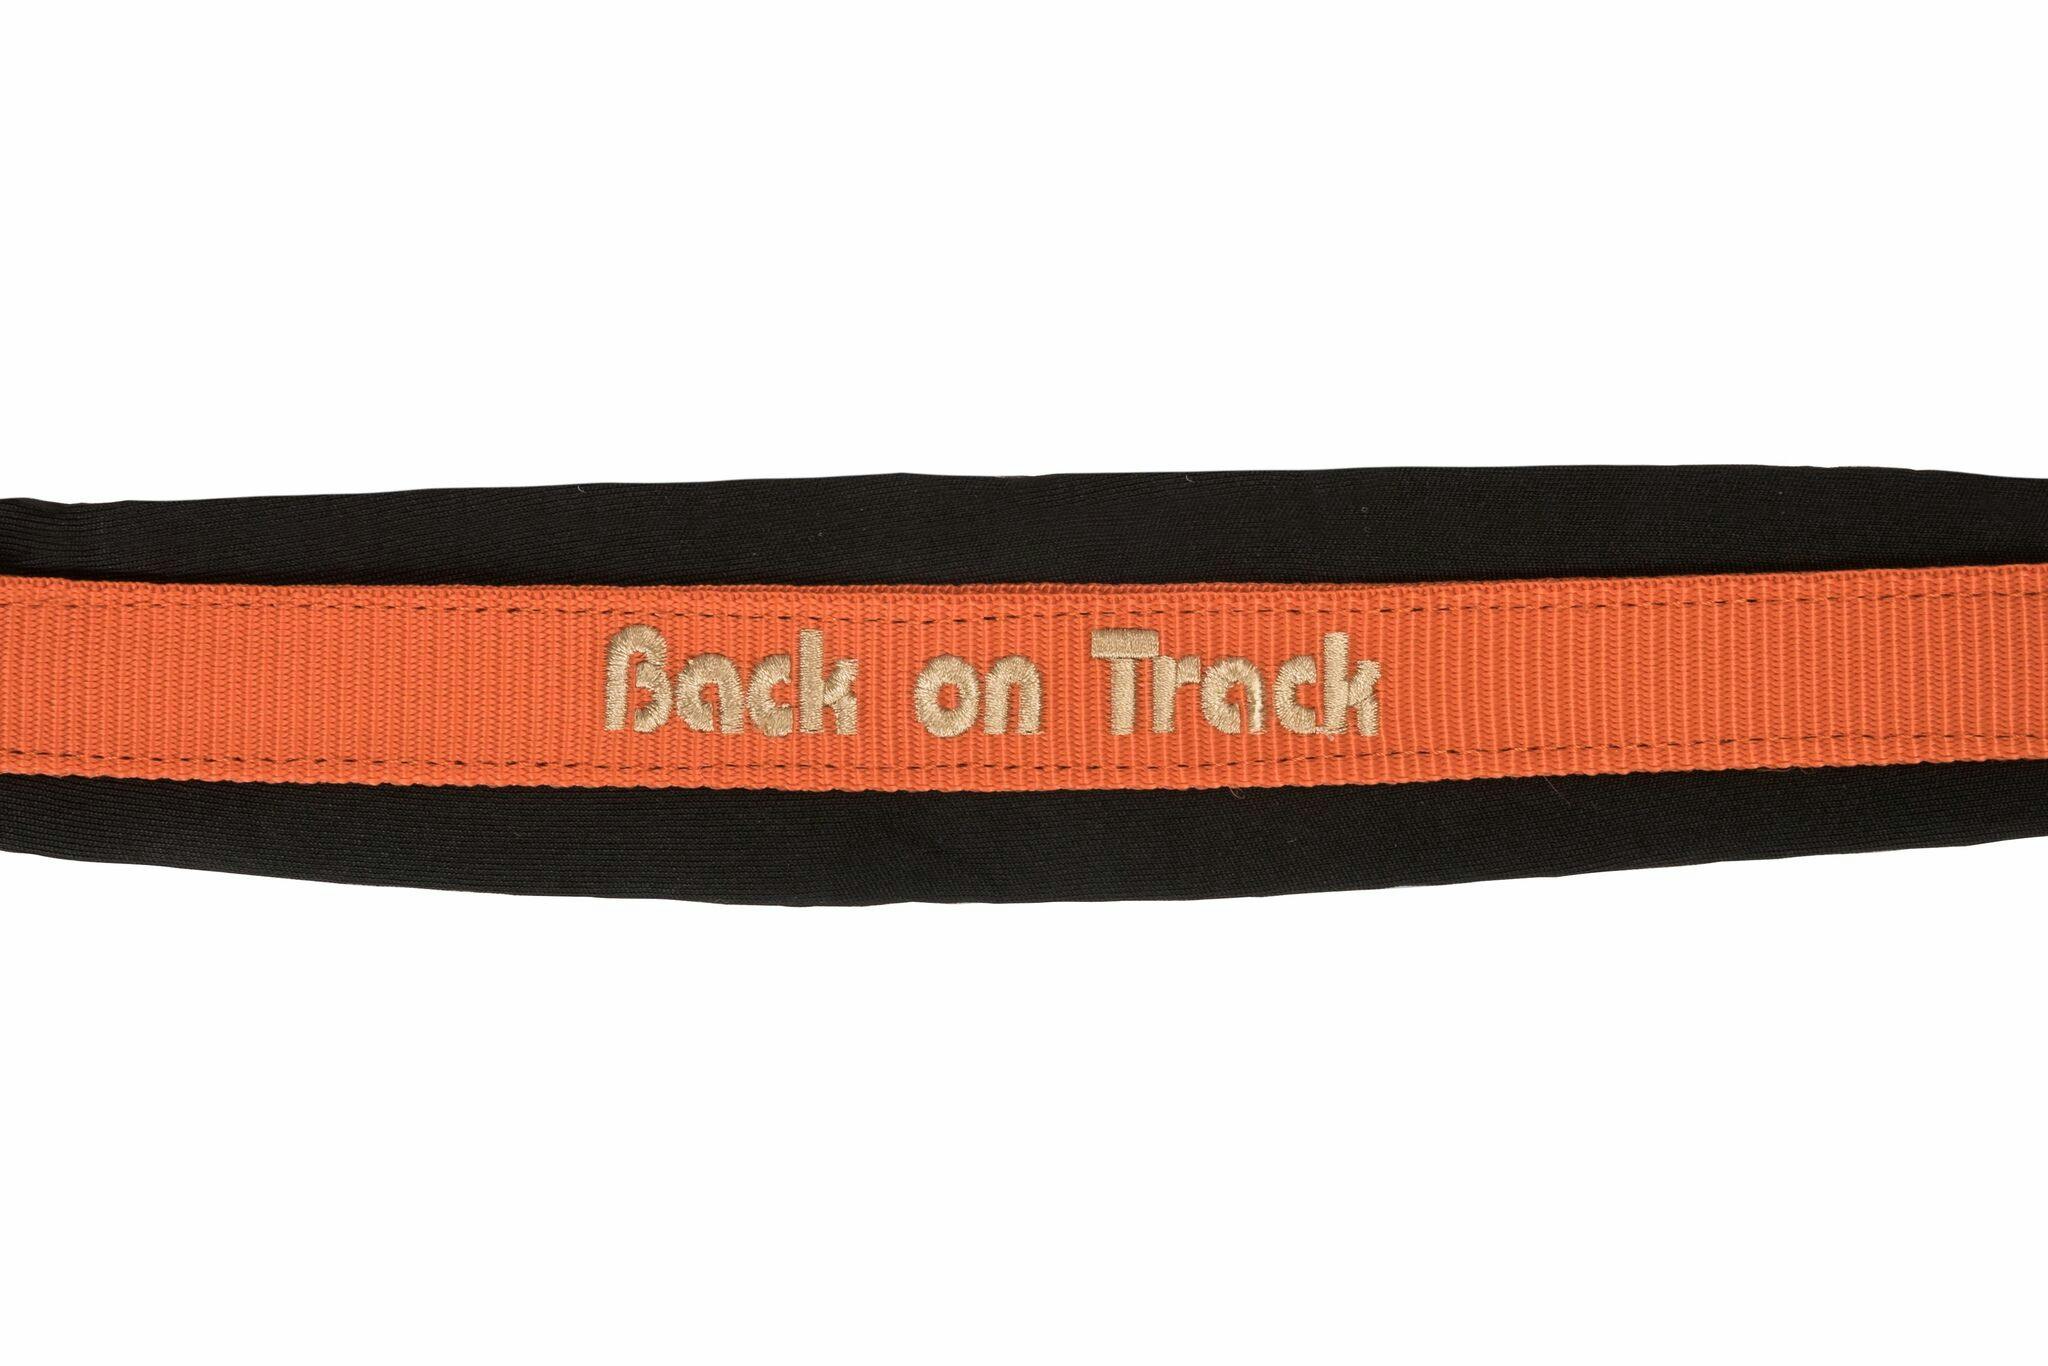 Back On Track Werano Grimma - Orange